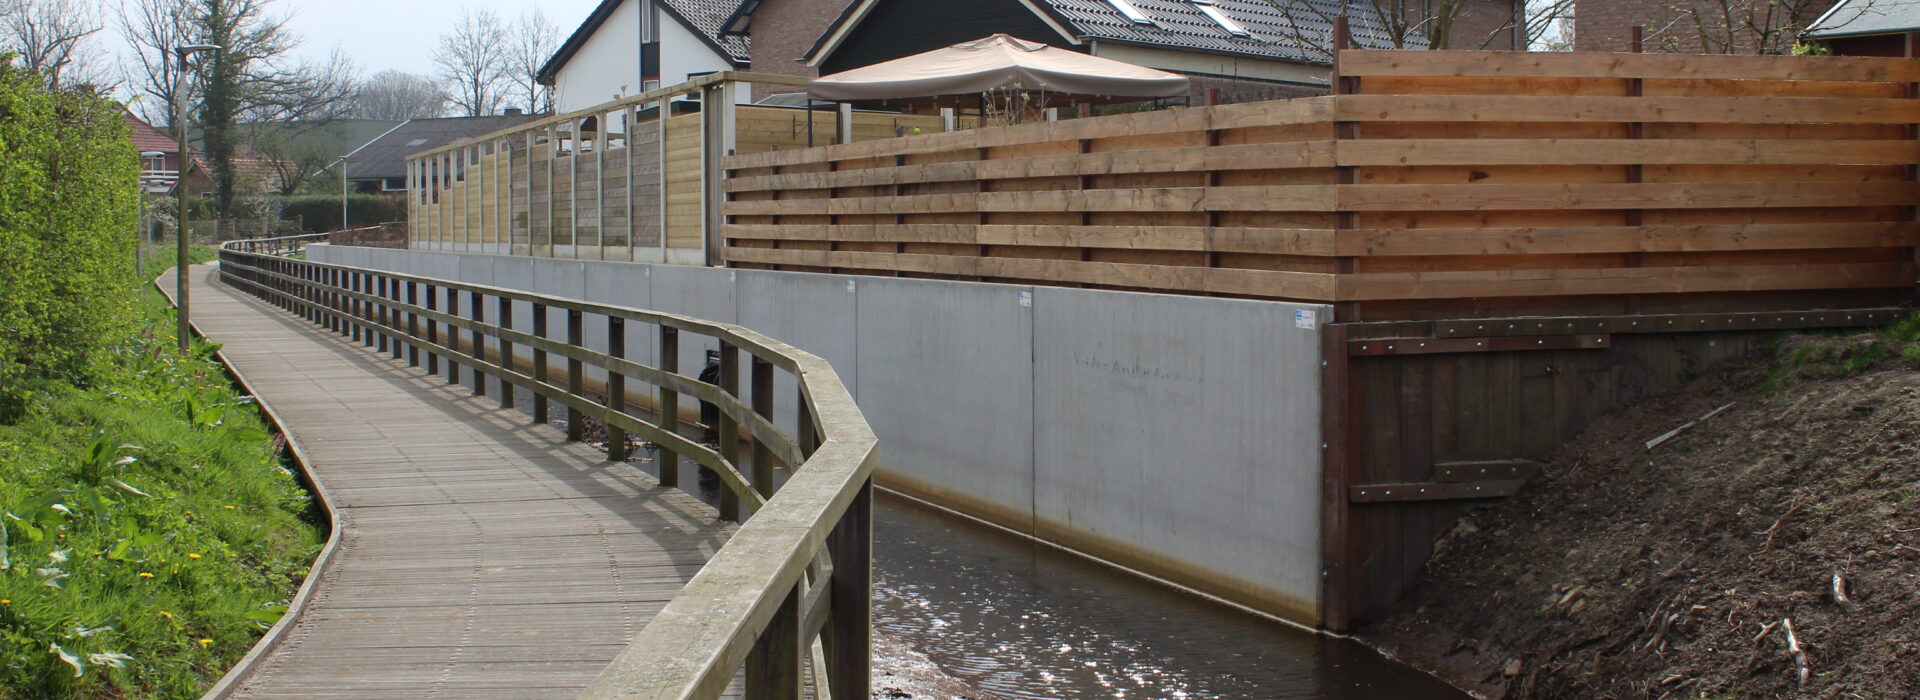 Bosch Beton - Keerwanden als grond- en waterkering langs vlonderpad in Weerselo